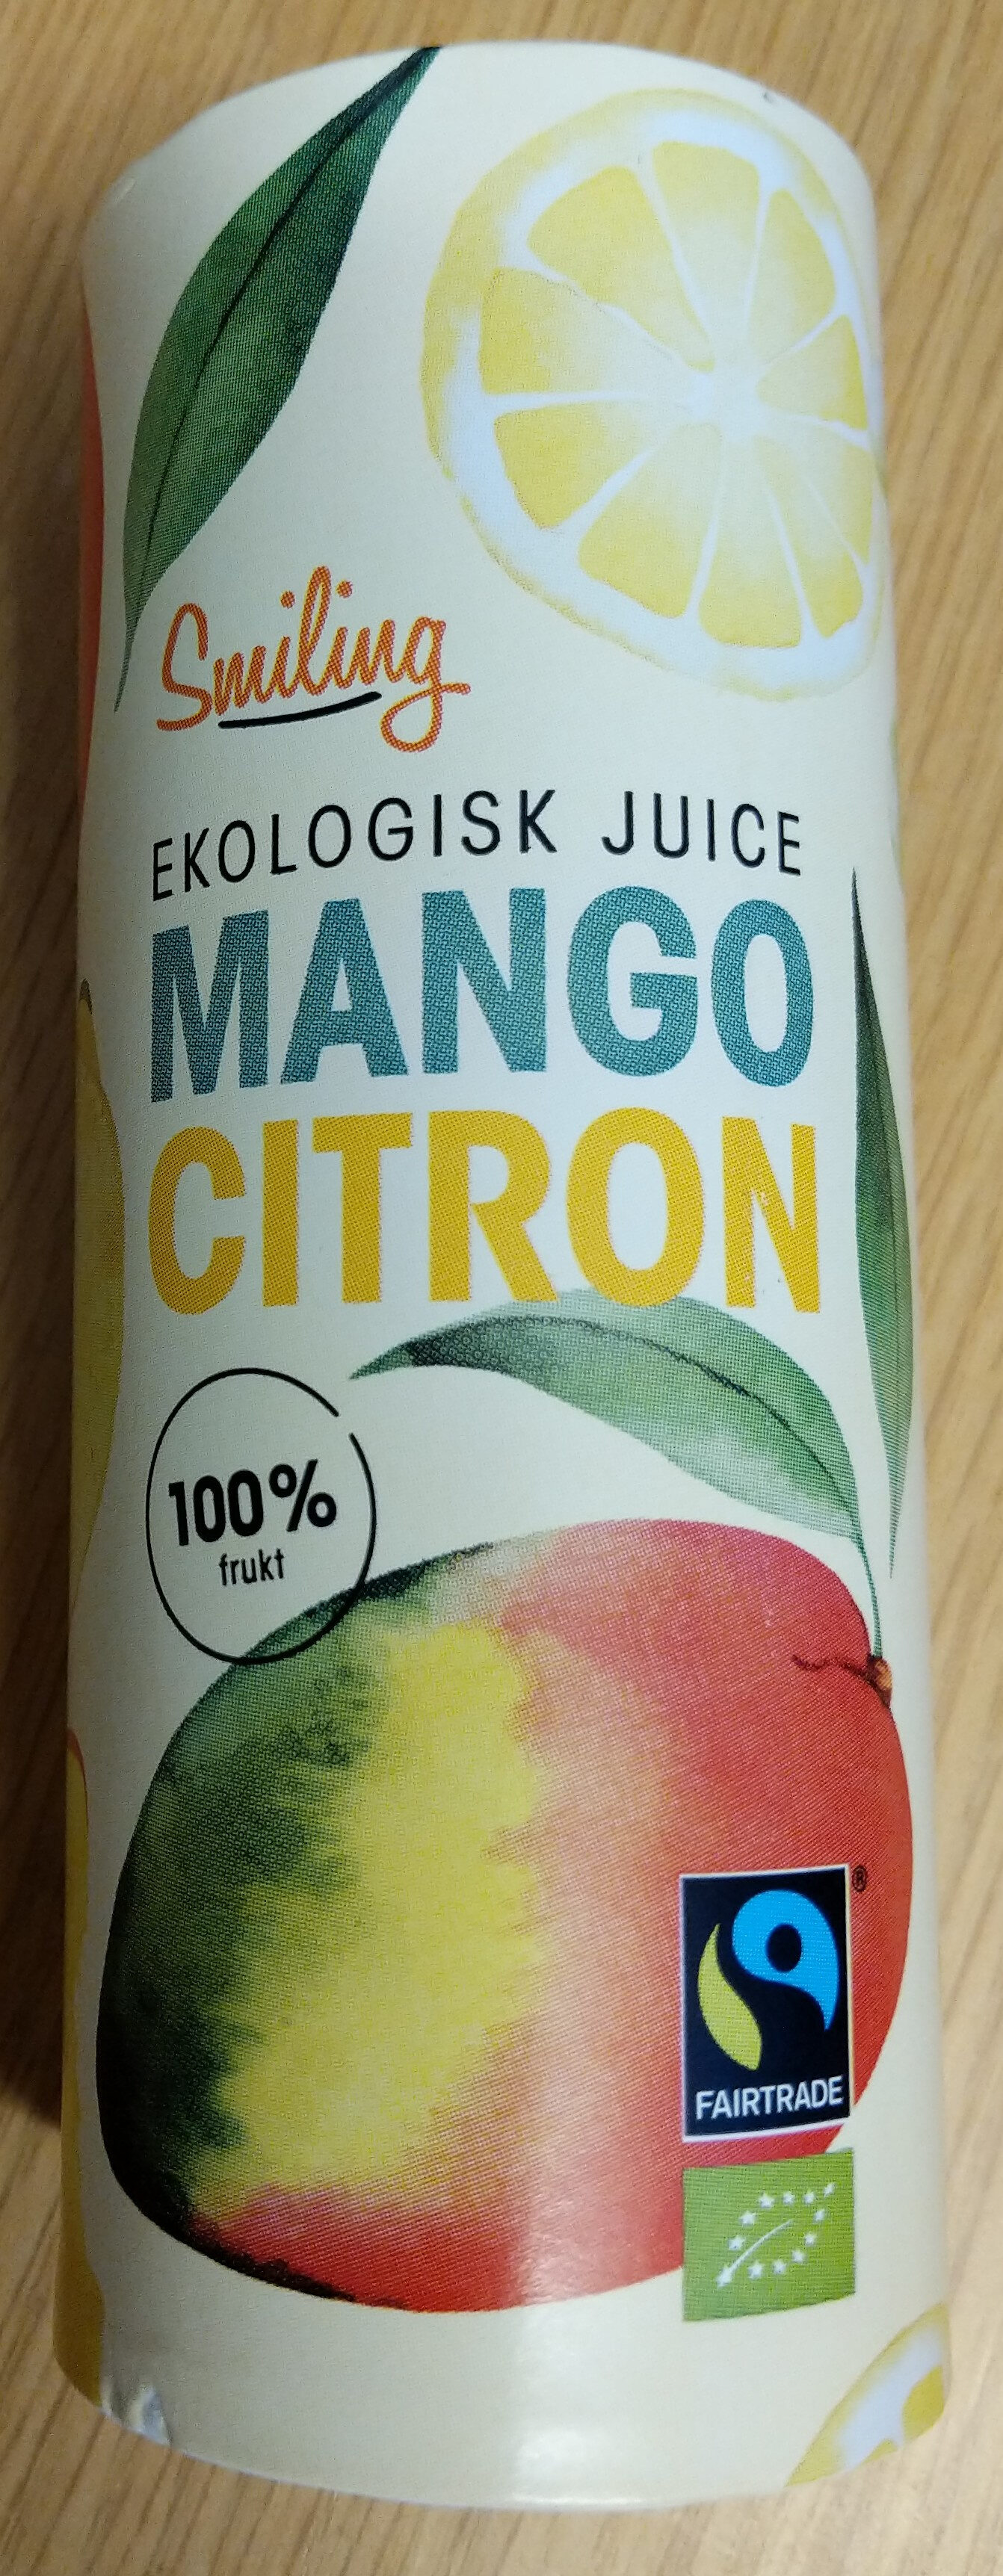 Ekologisk Juice Mango Citron - Produkt - sv